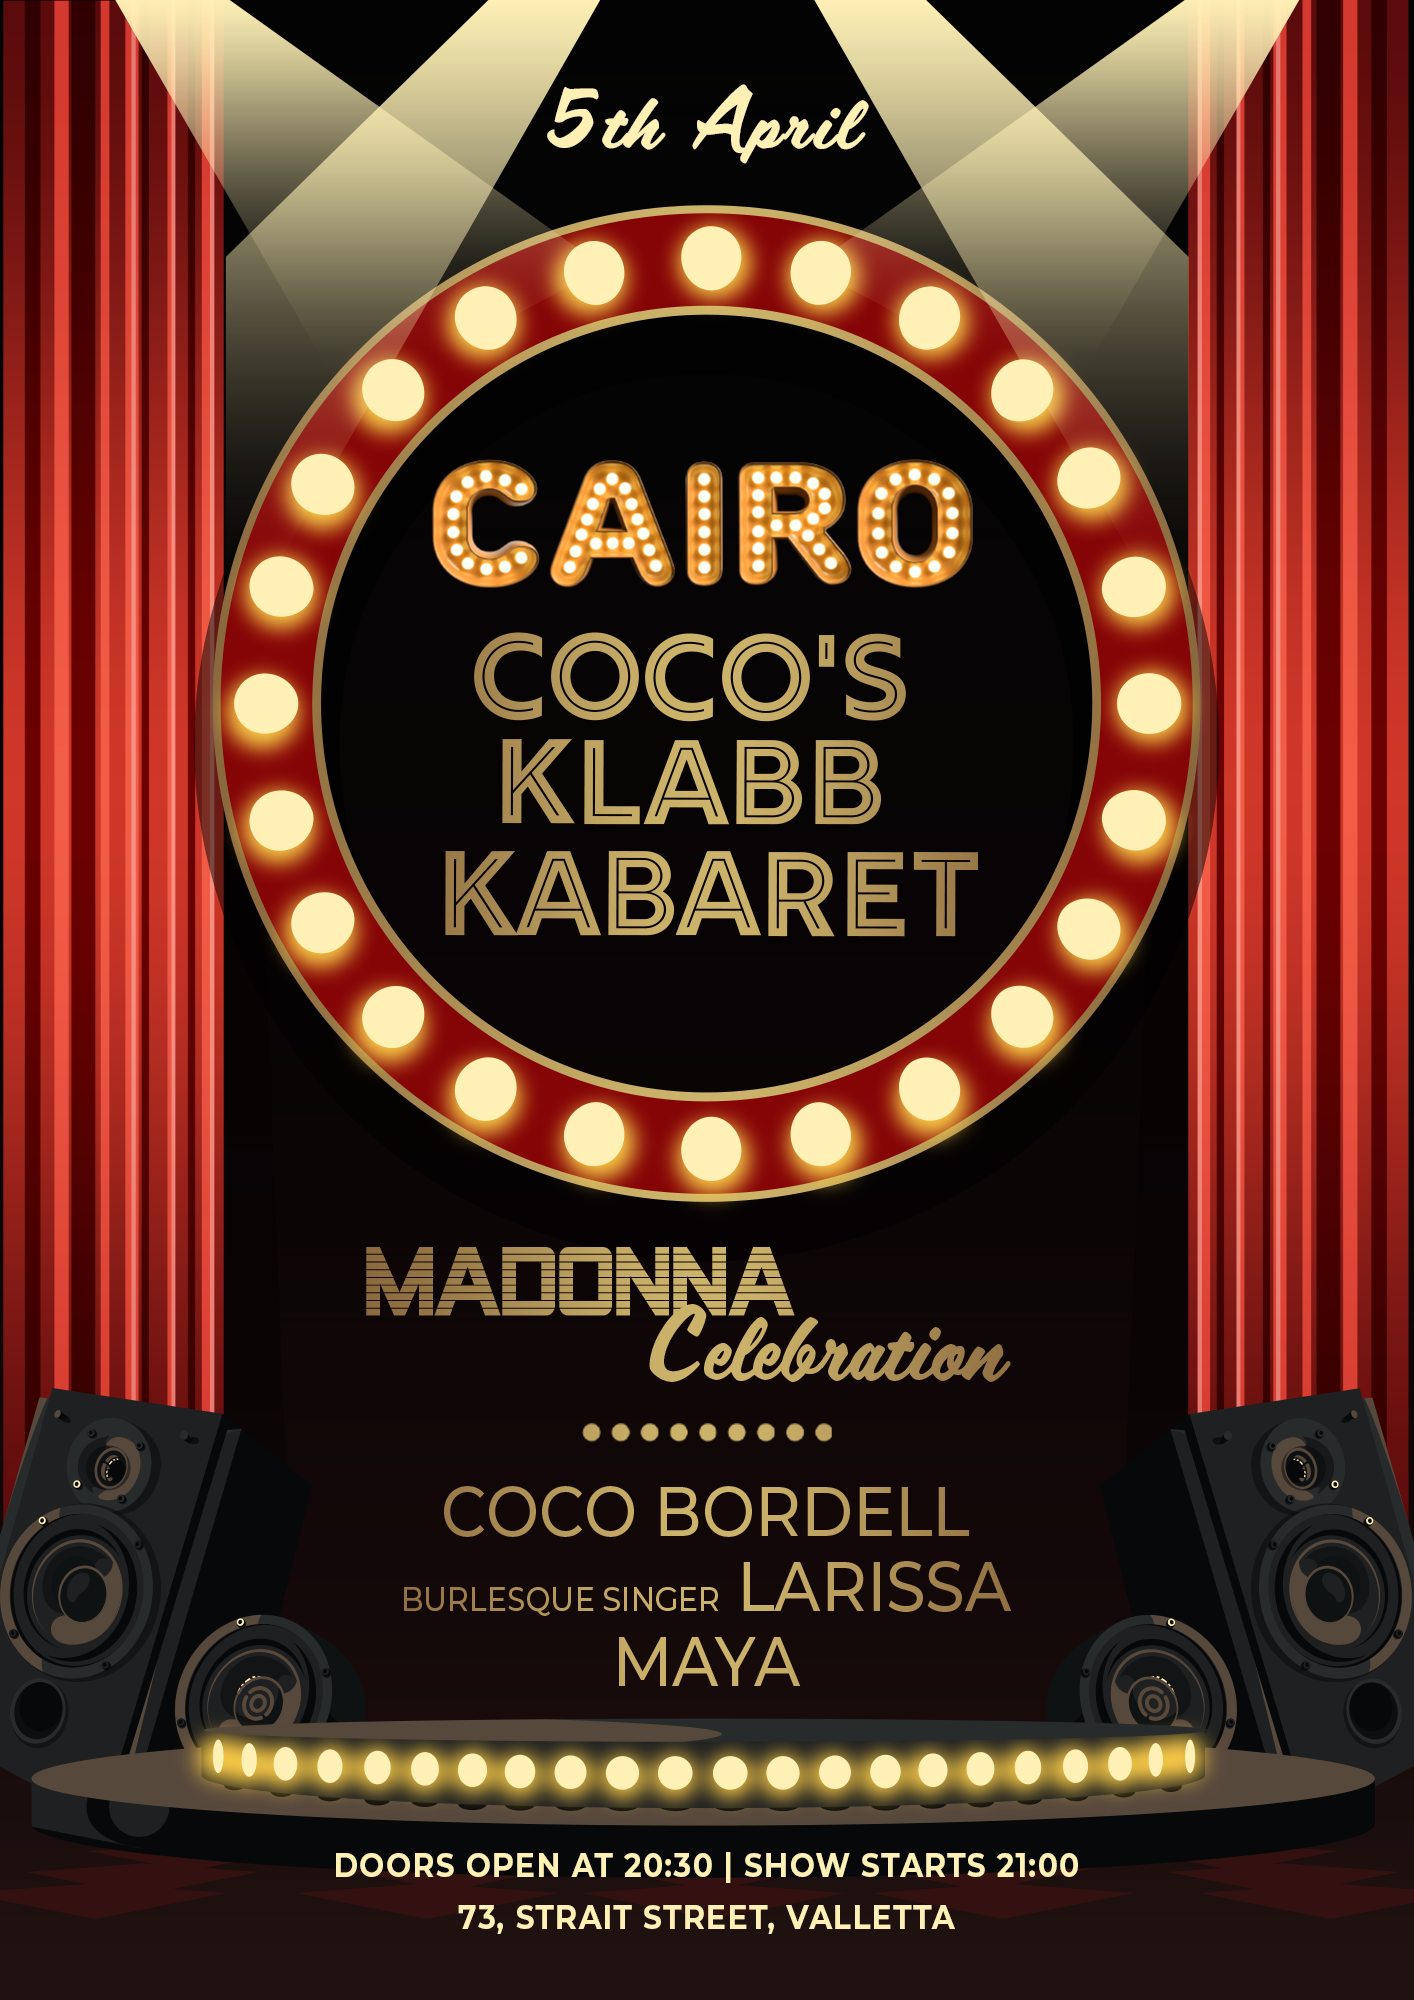 Coco's Klabb Kabaret Madonna Celebration